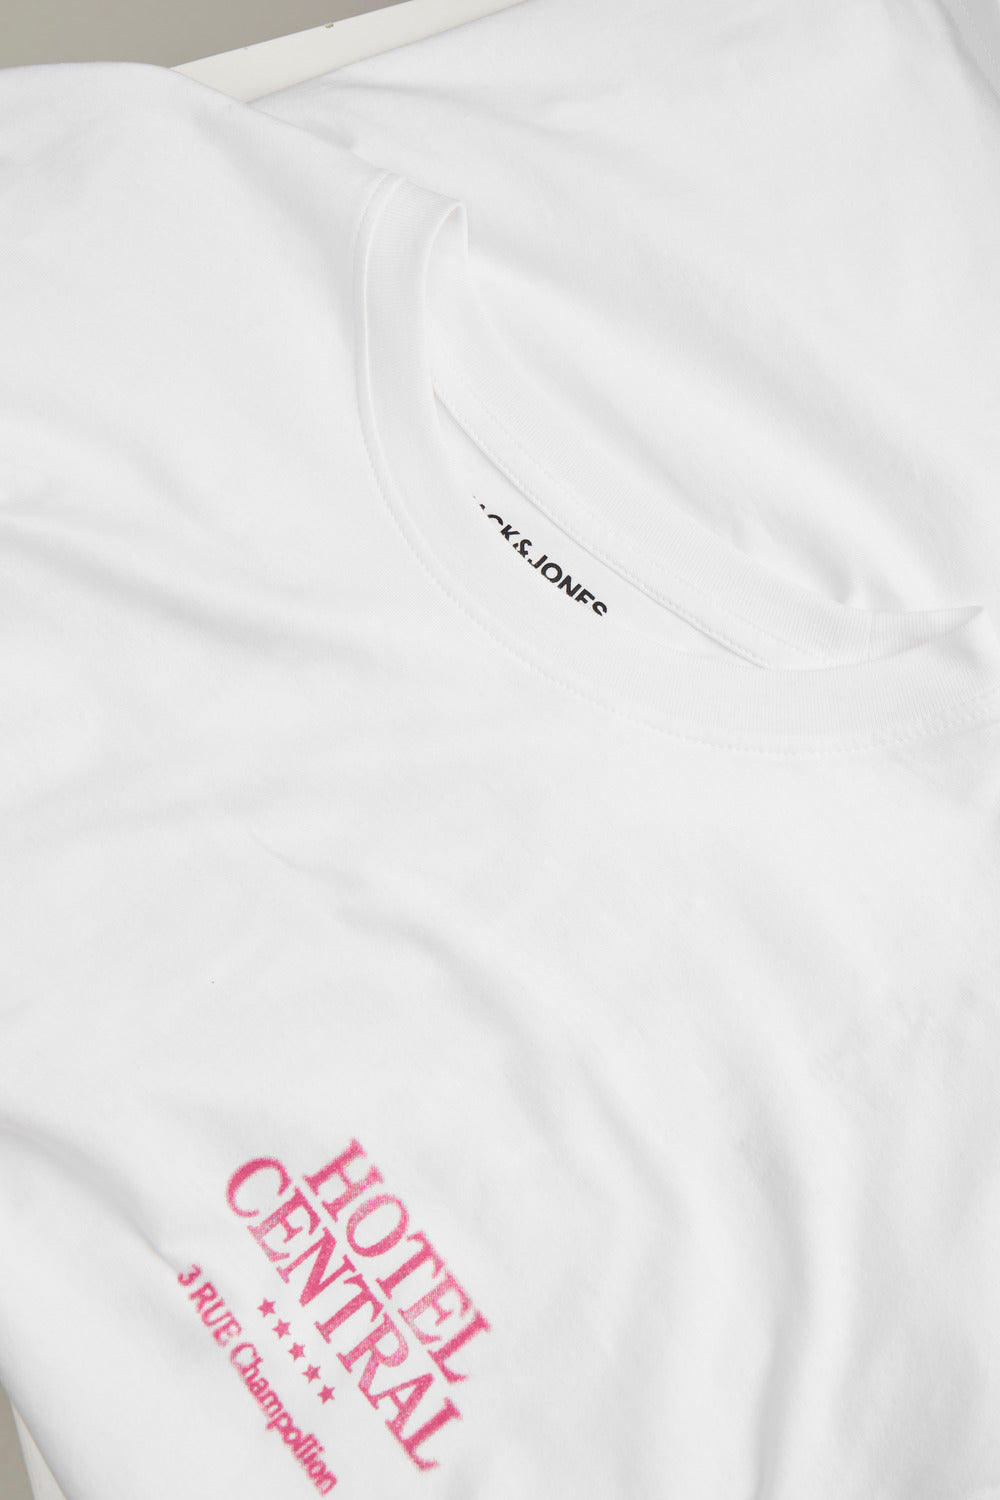 Camiseta de manga corta- JORREDHOOK Blanco